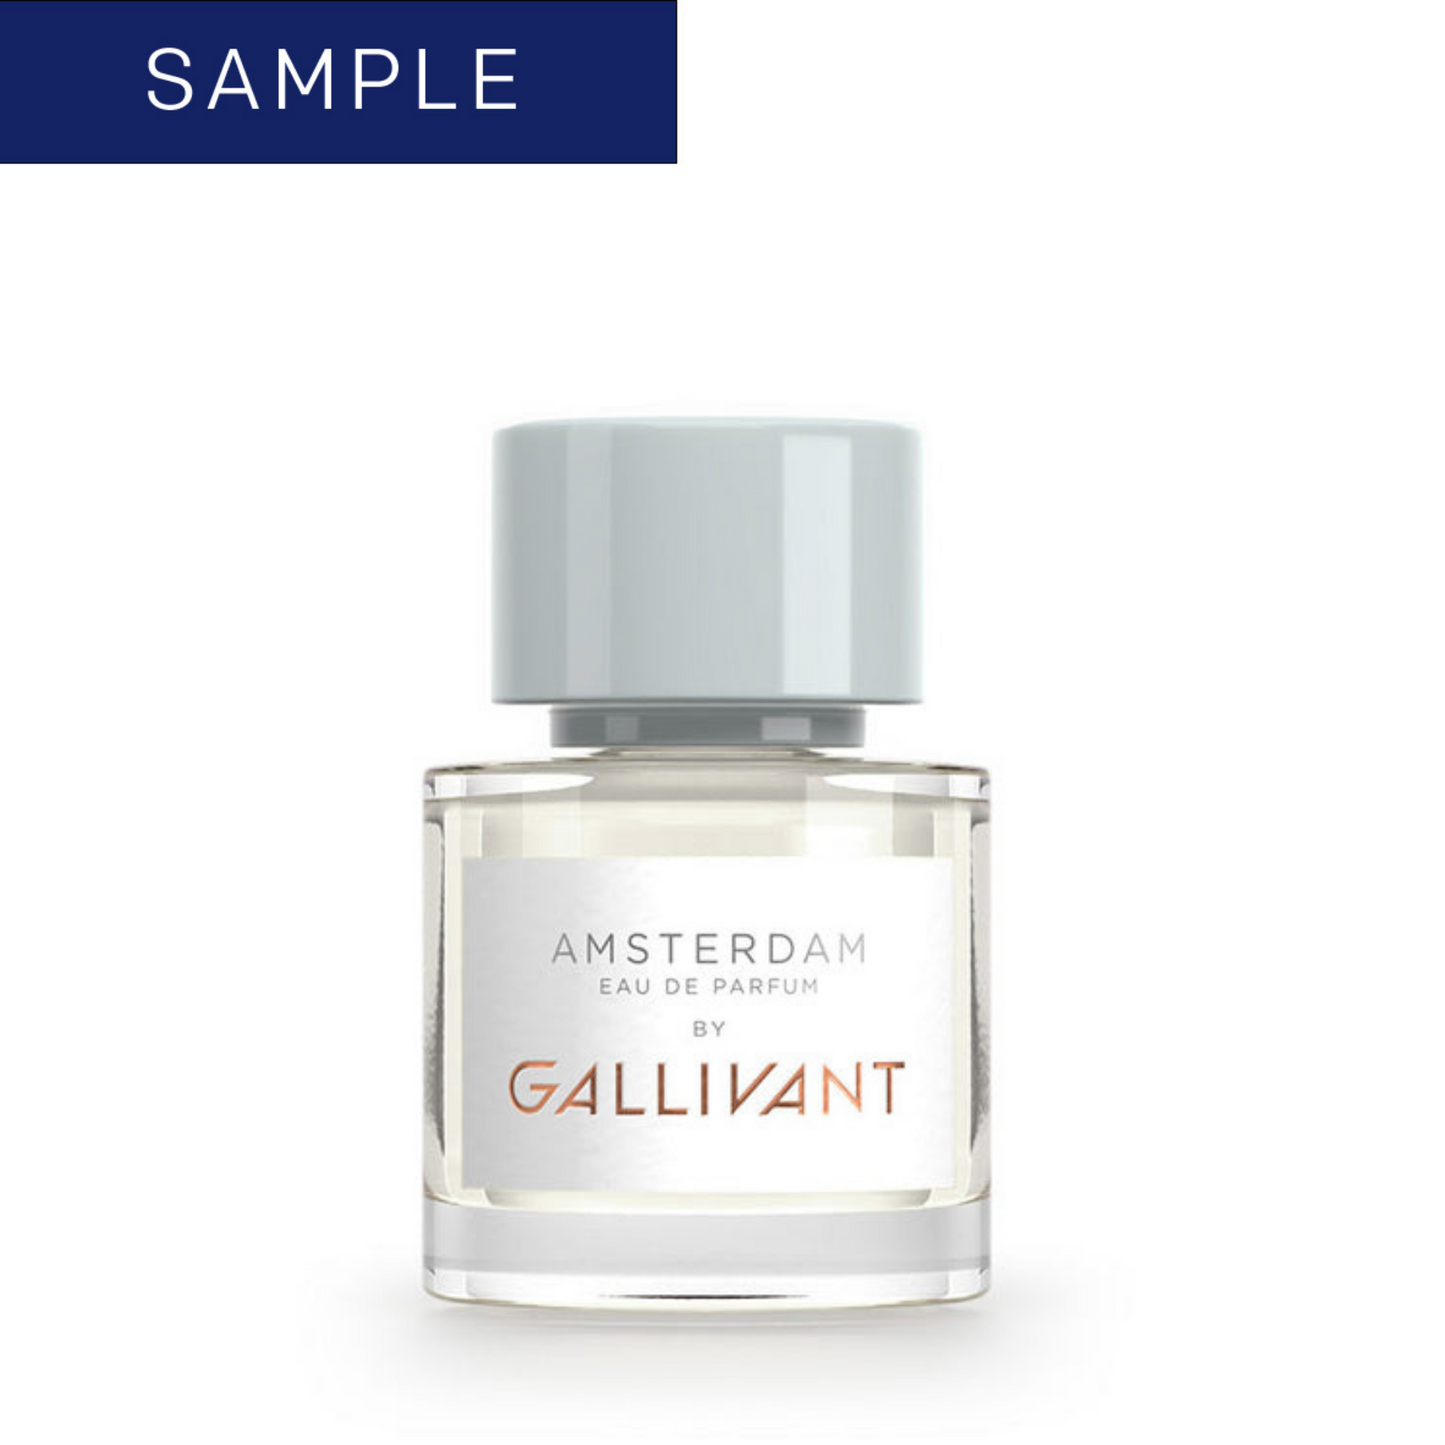 Alternate image of Sample - Amsterdam Eau de Parfum